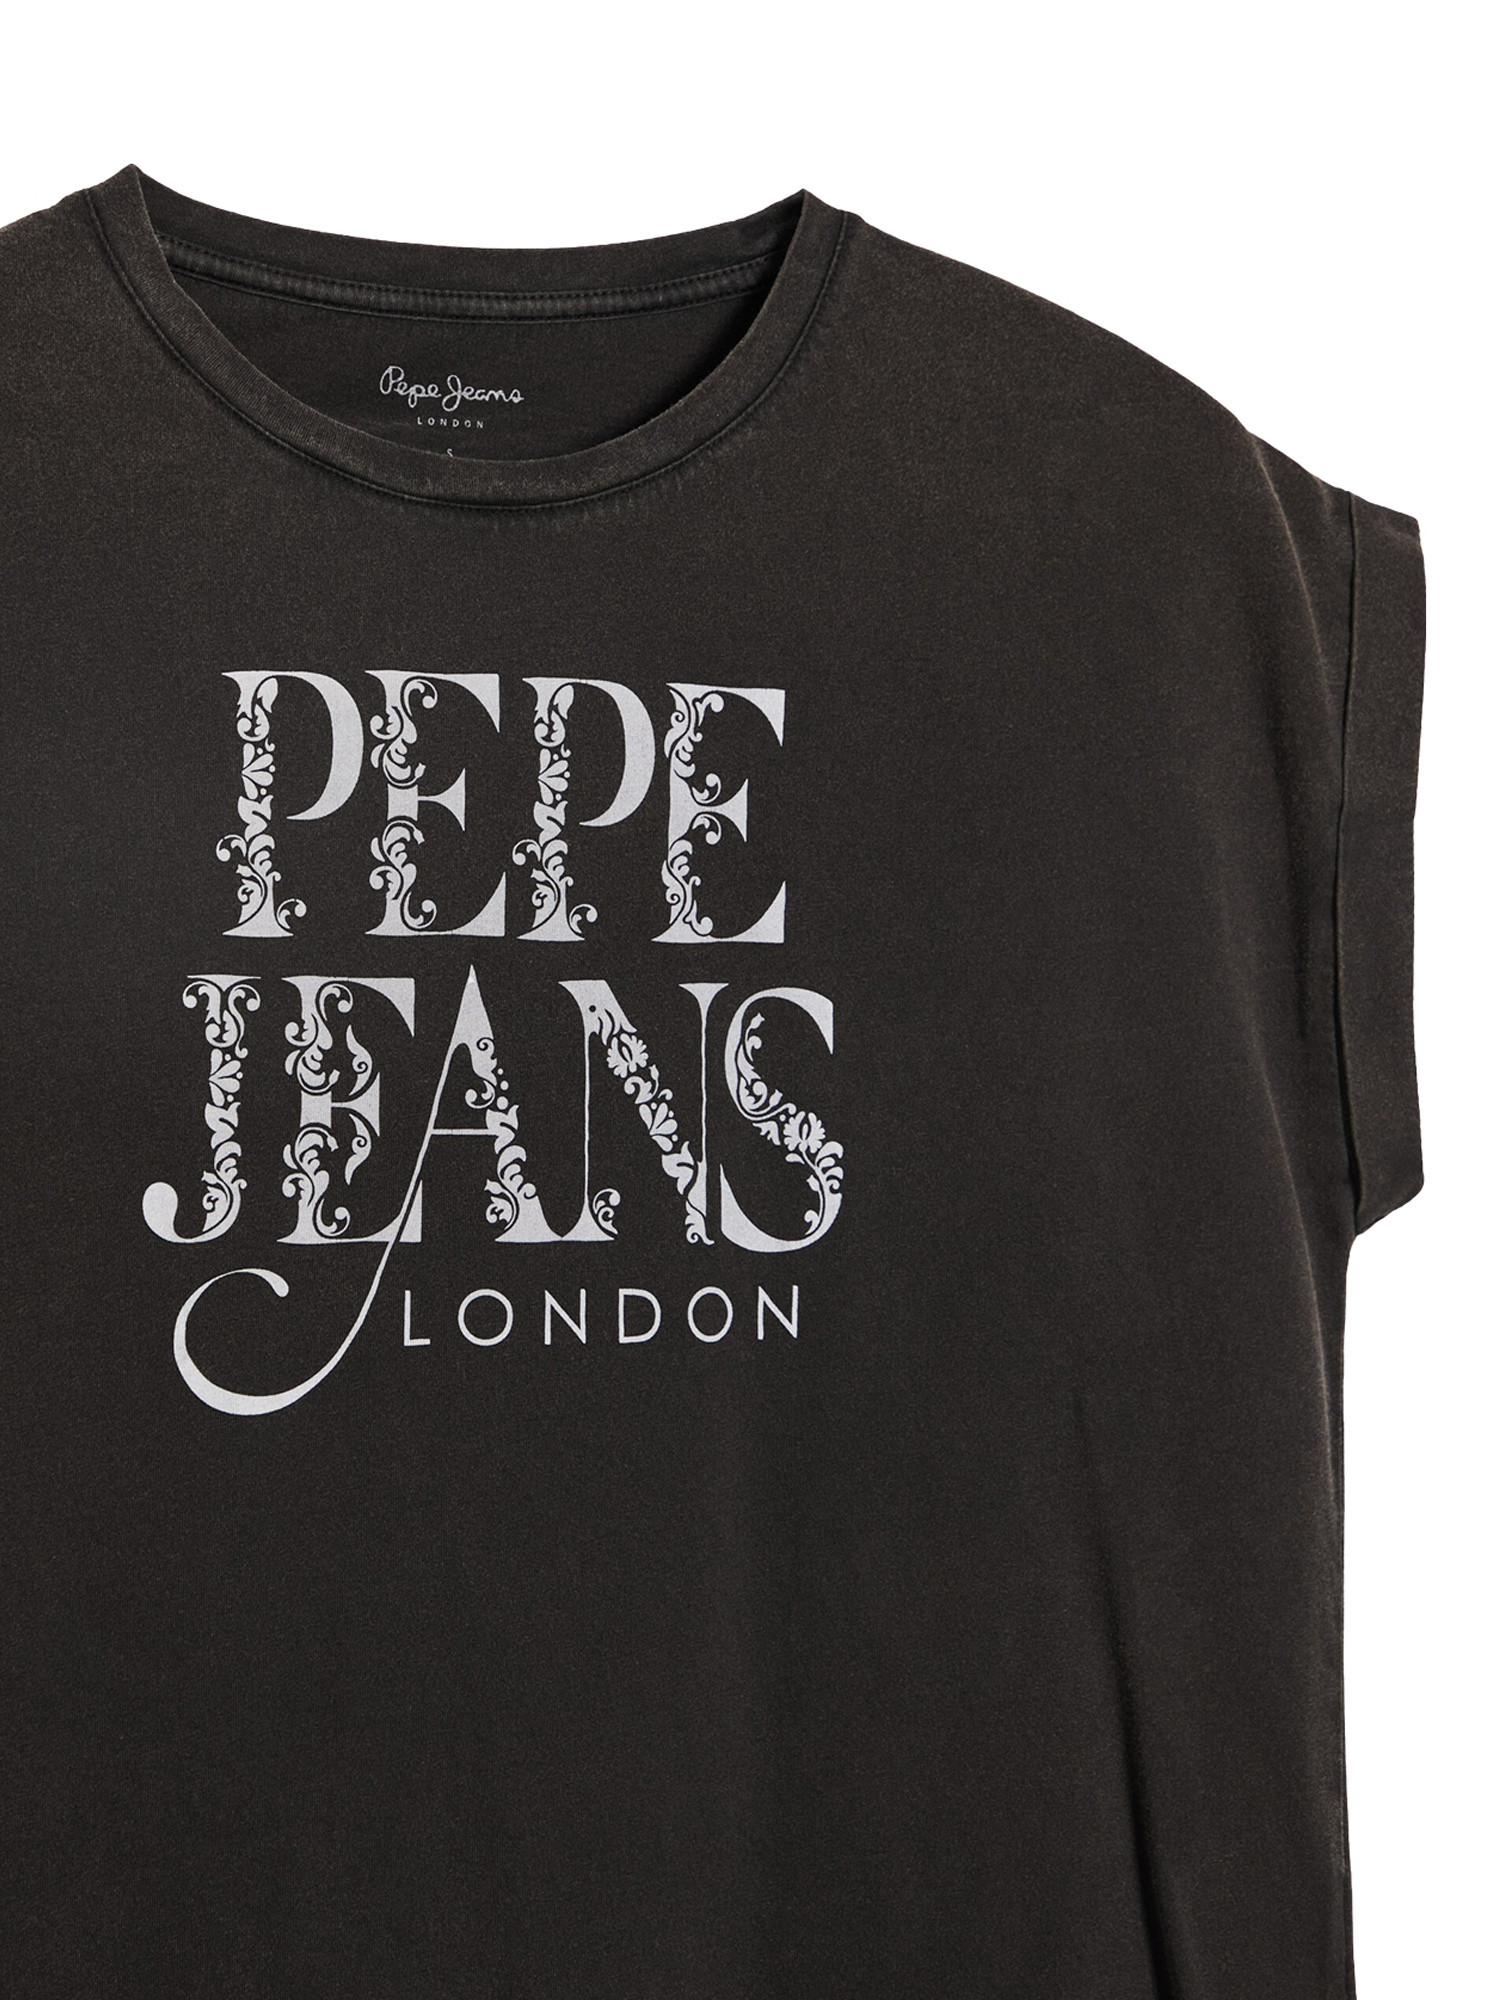 Pepe Jeans - Cotton logo T-shirt, Black, large image number 2